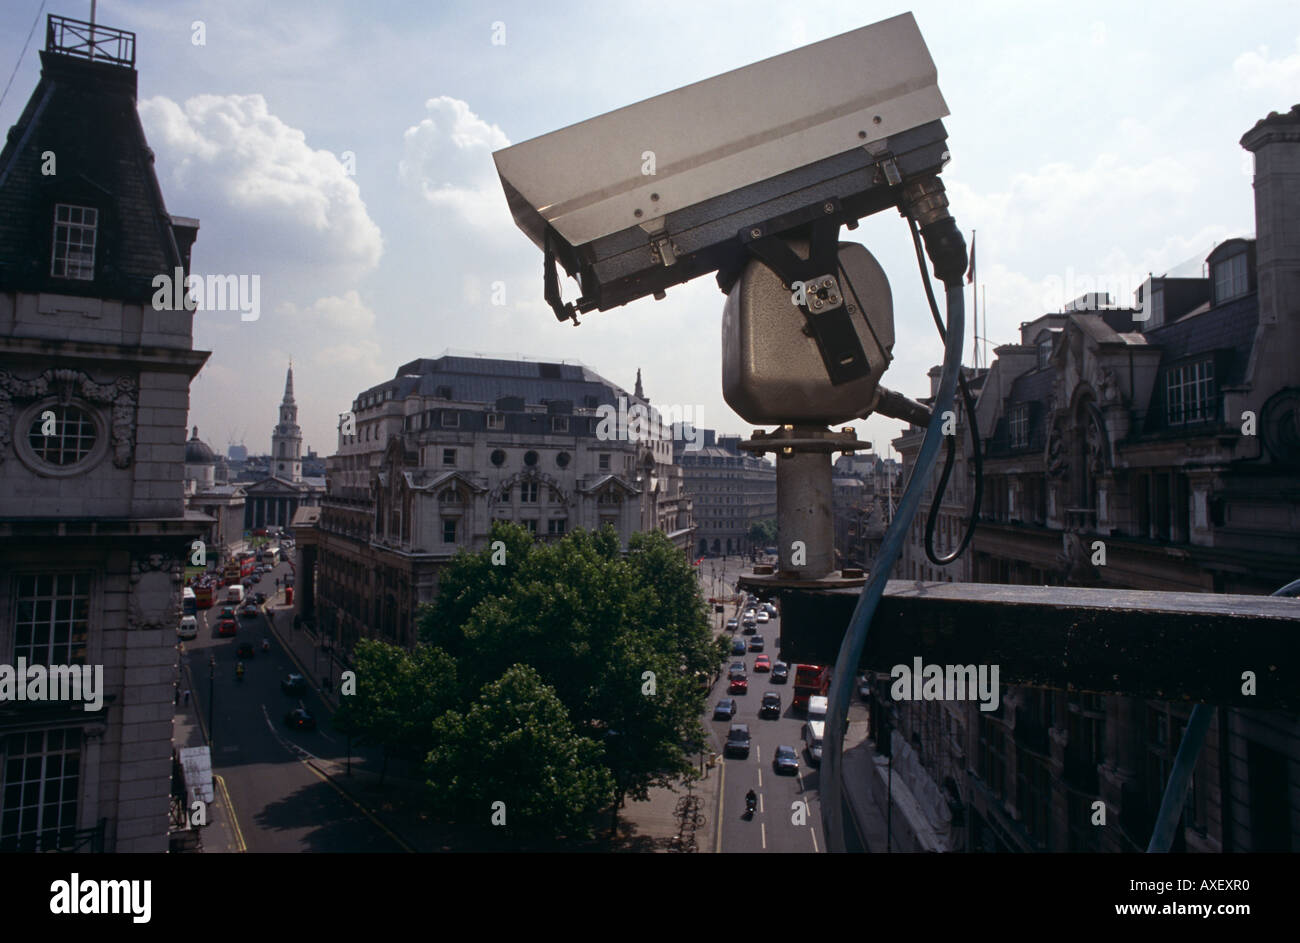 A CCTV camera looks down on a Central London street near Trafalgar Square. Stock Photo